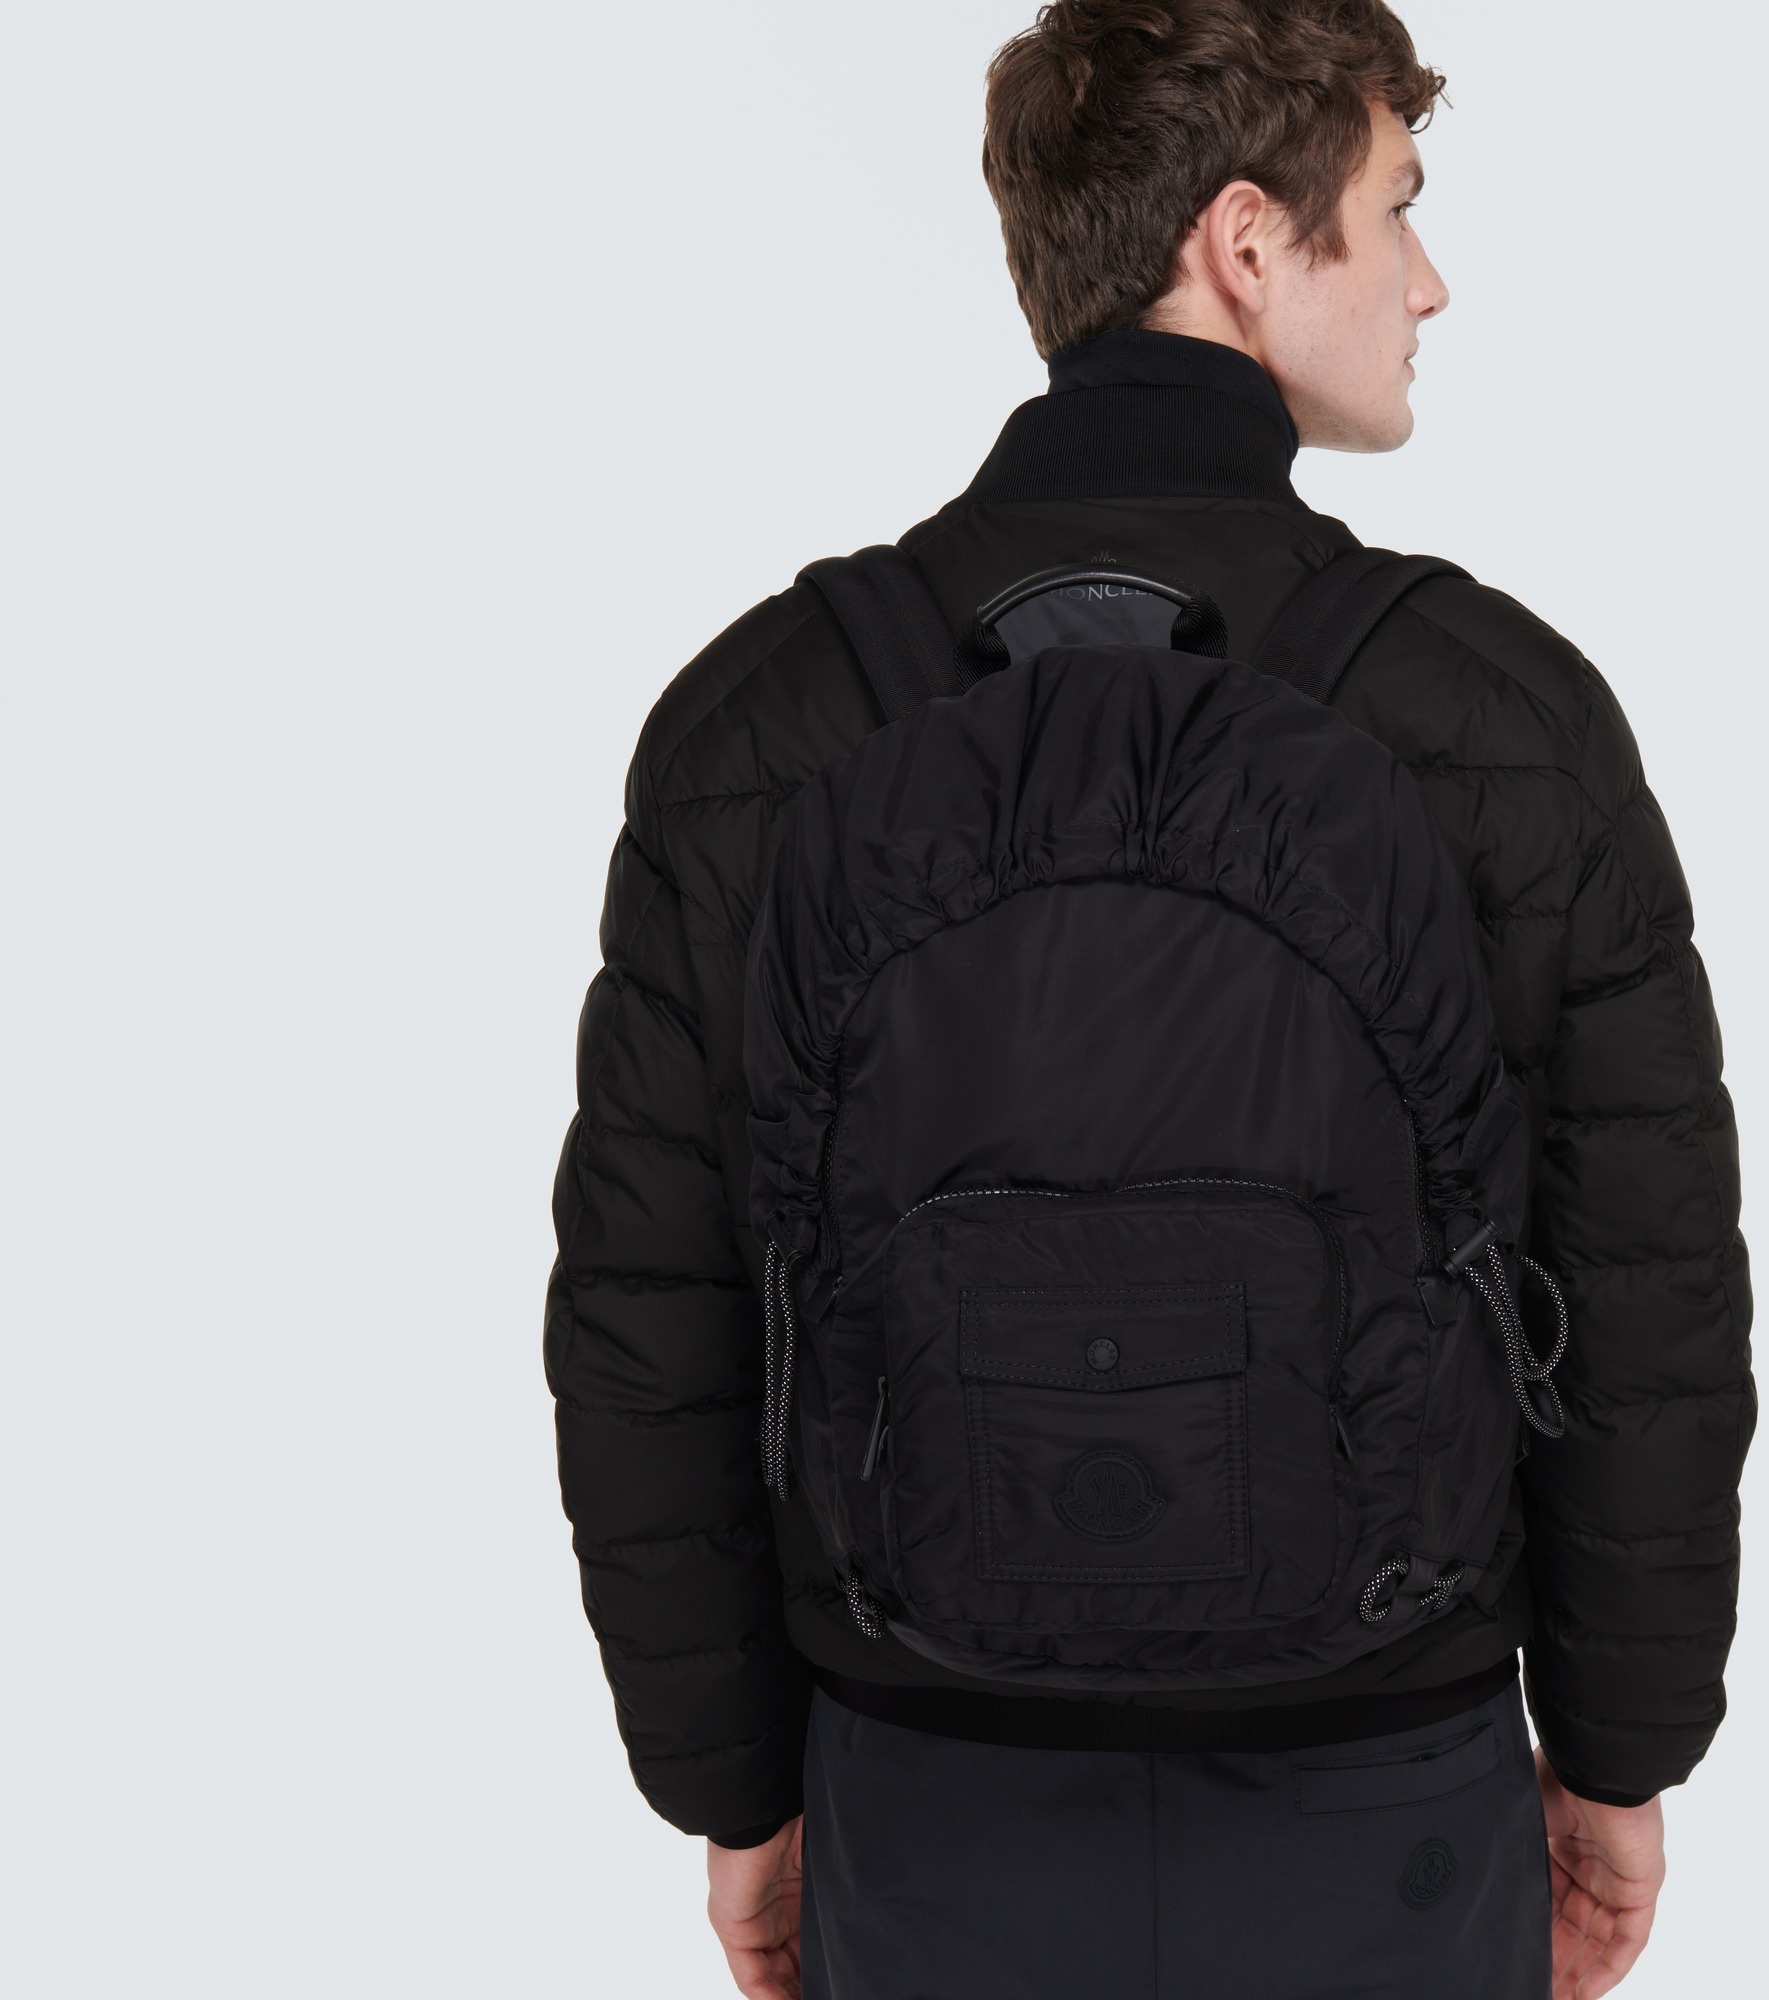 Makaio backpack - 3